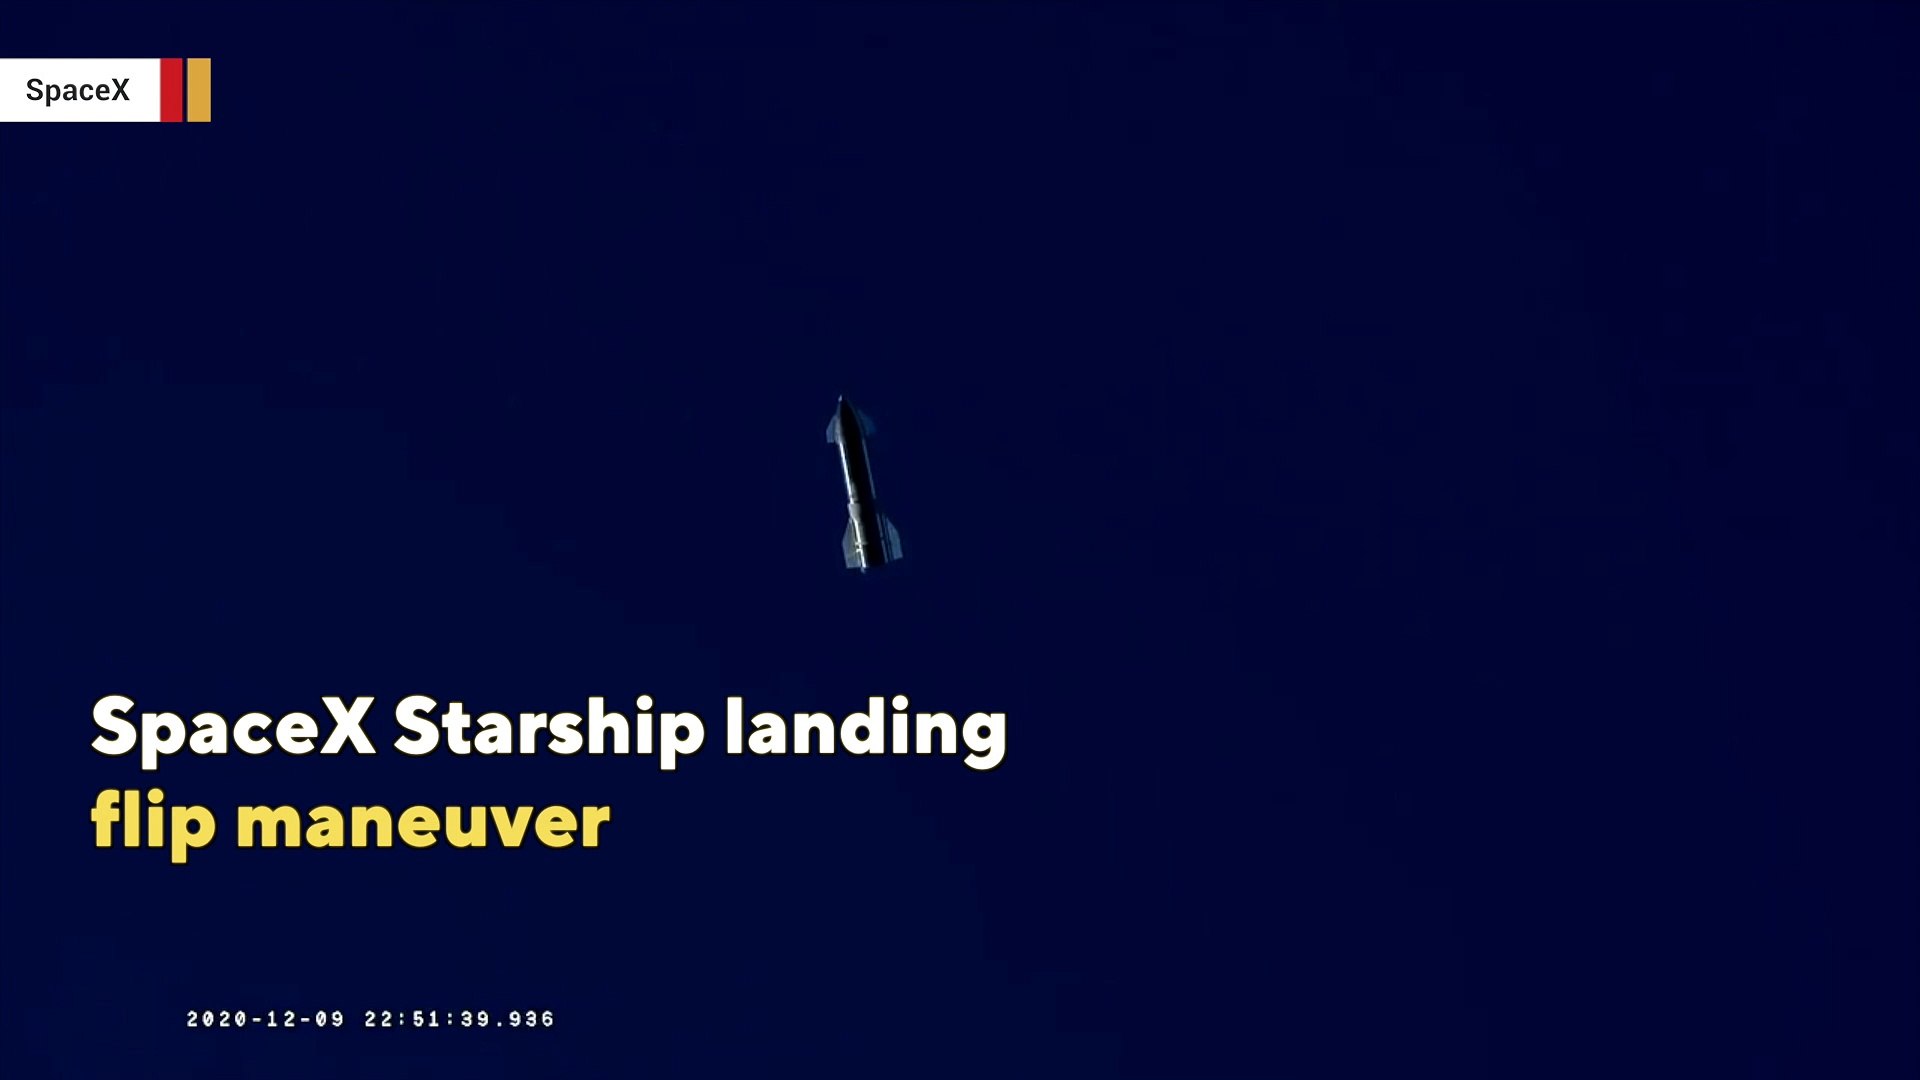 Watch SpaceX Starship's amazing landing flip maneuver